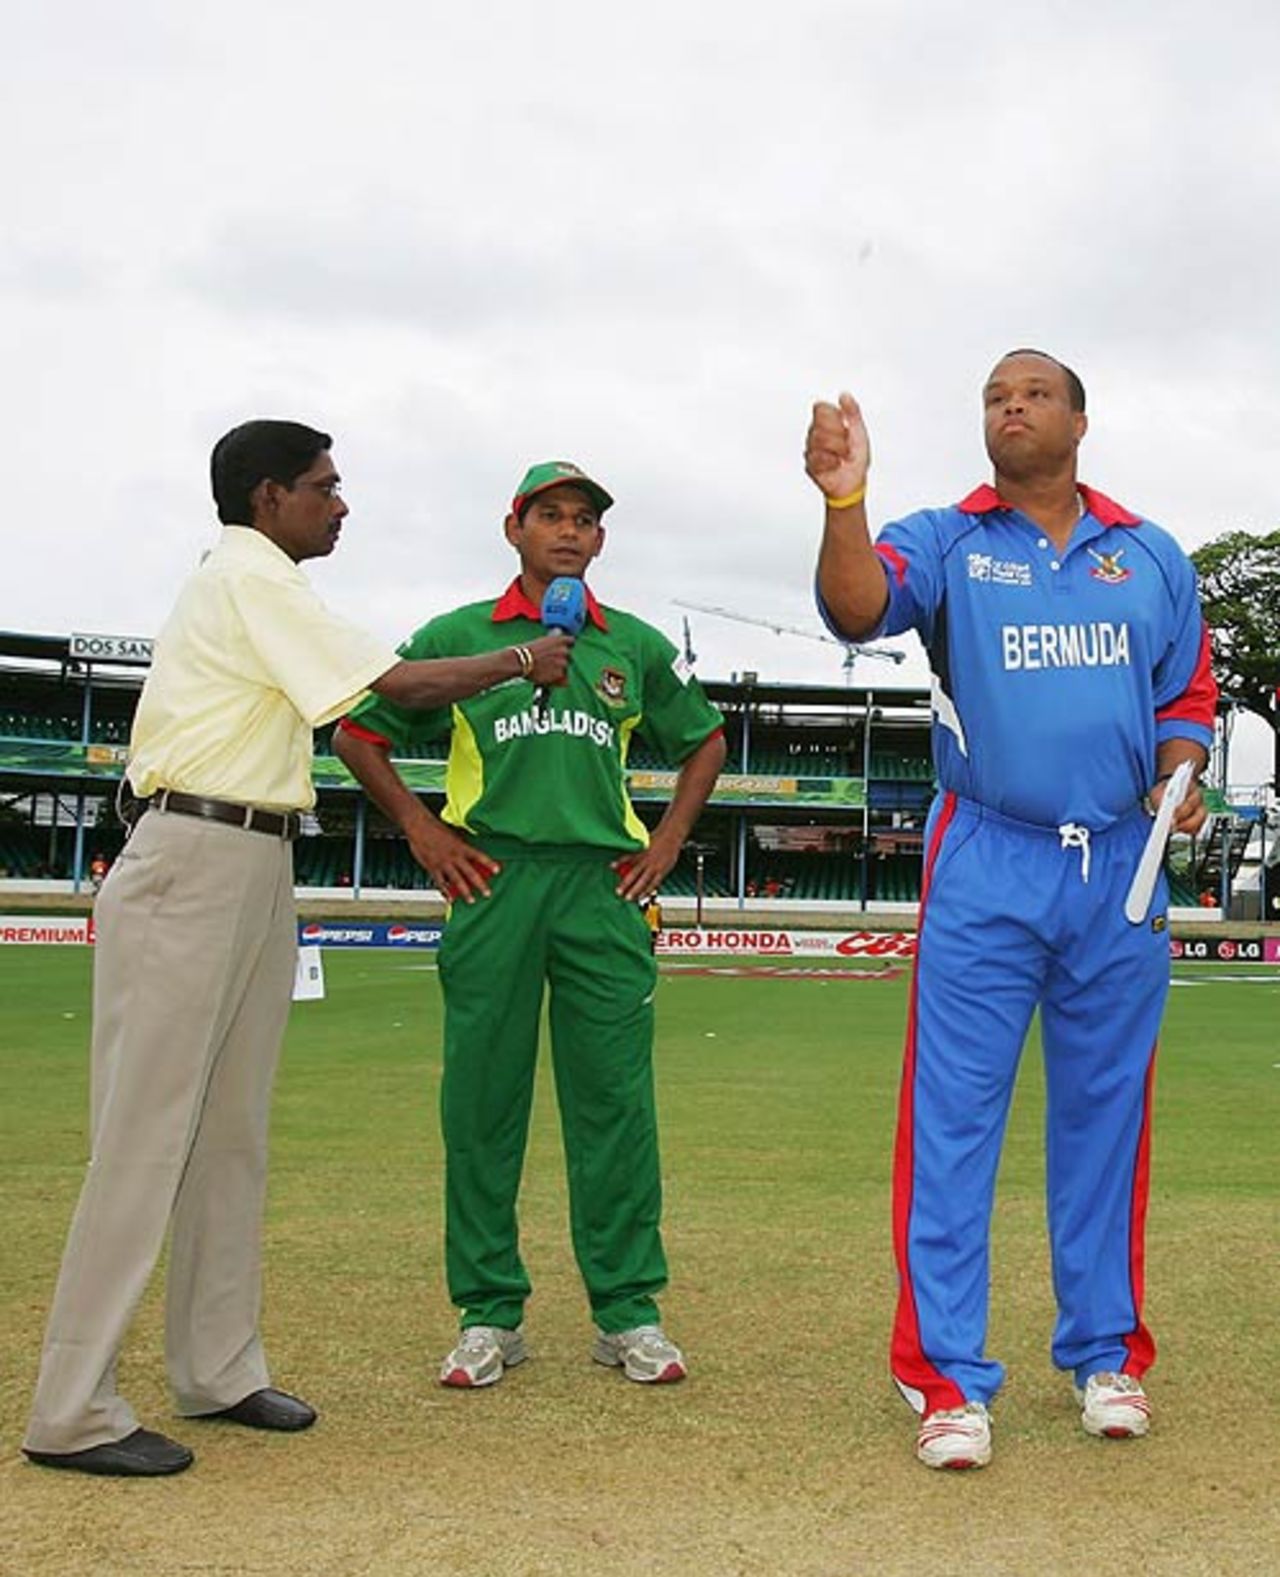 Habibul Bashar won the toss and asked Bermuda to bat, Bangladesh v Bermuda, Trinidad, March 25, 2007